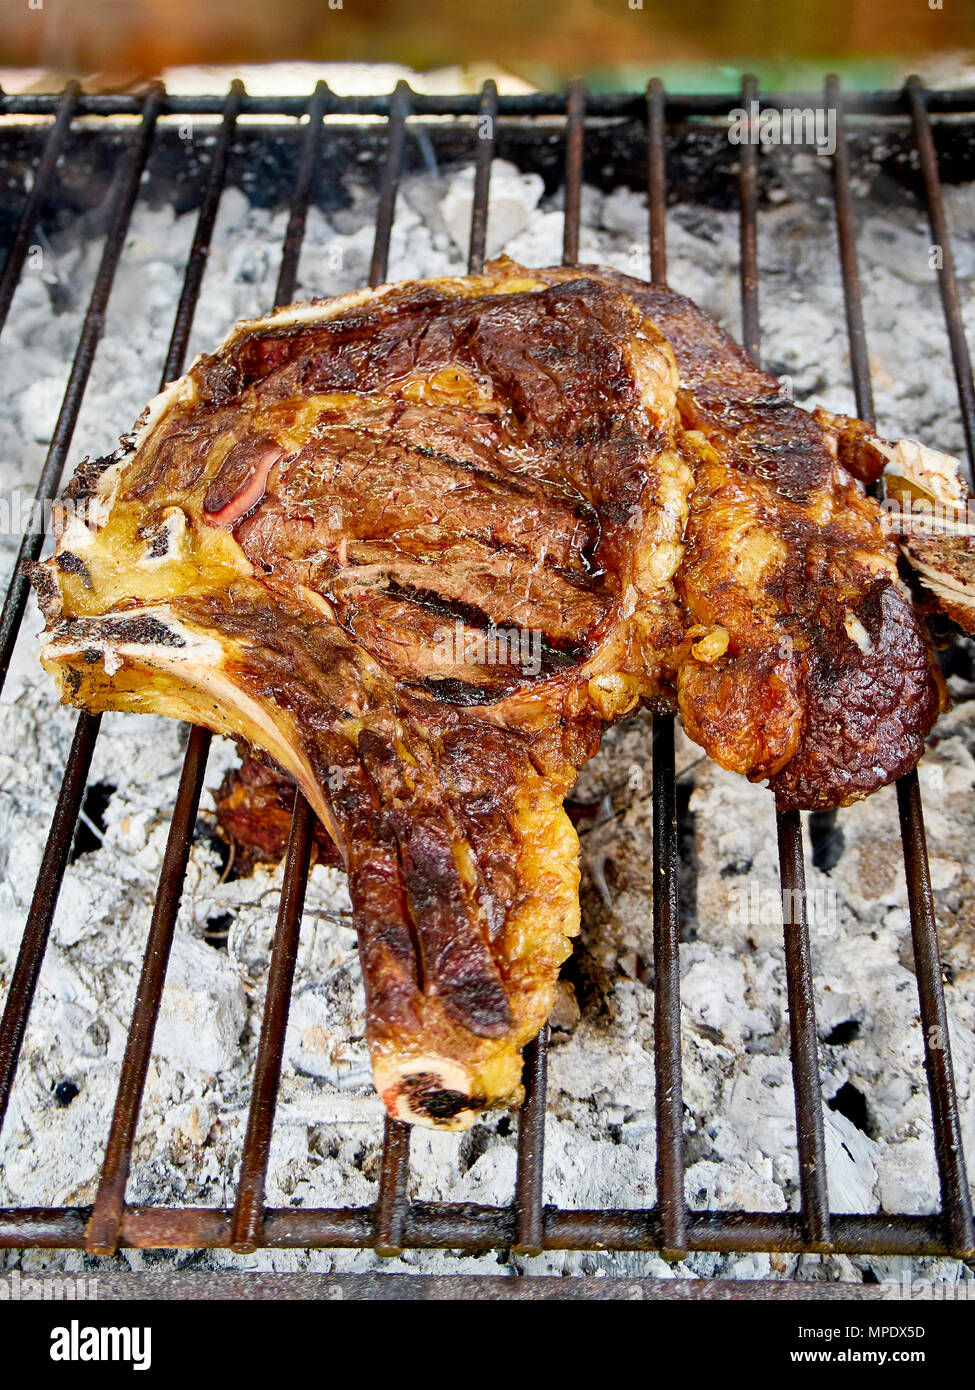 Spanish beef Chuleton, also known as Bone-in Ribeye steak, Cowboy steak, Prime Rib steak or Veal chop, on the charcoal bbq. Stock Photo